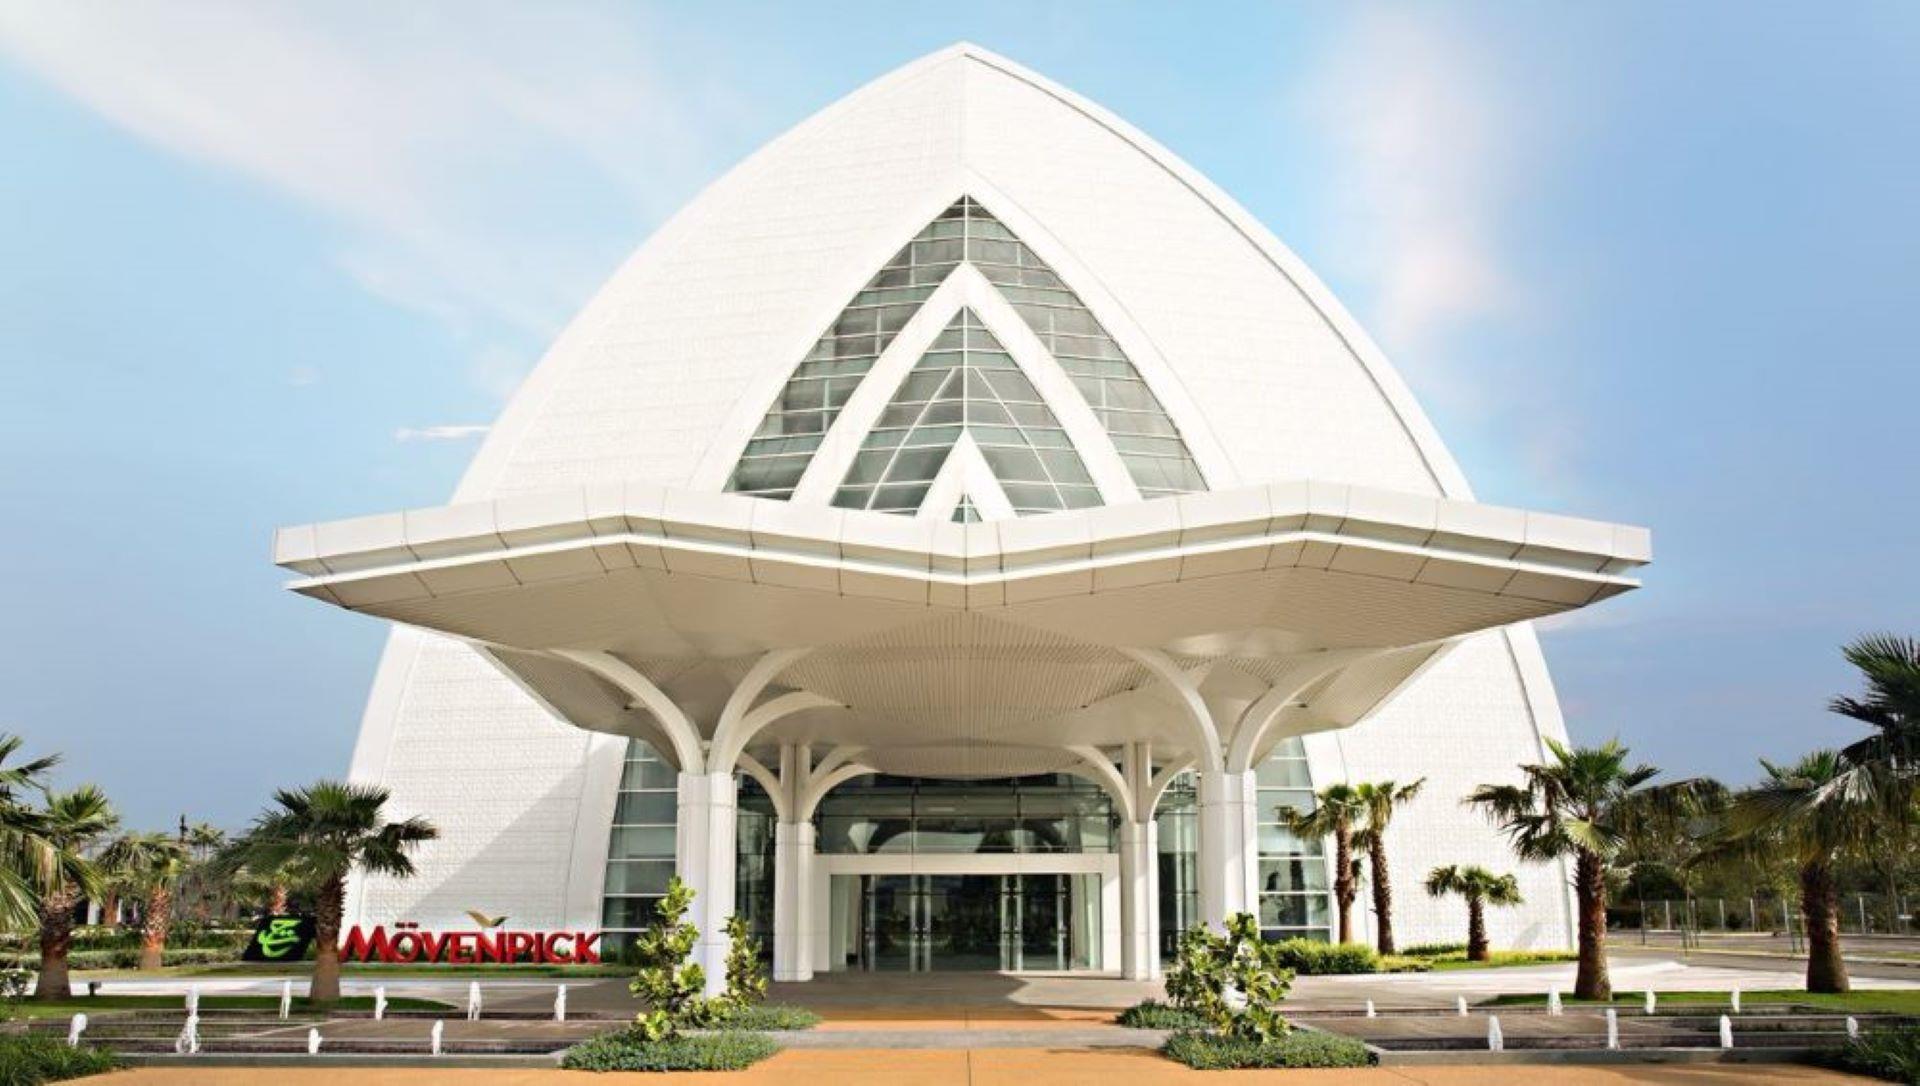 Movenpick Hotel & Convention Centre KLIA in Sepang, MY